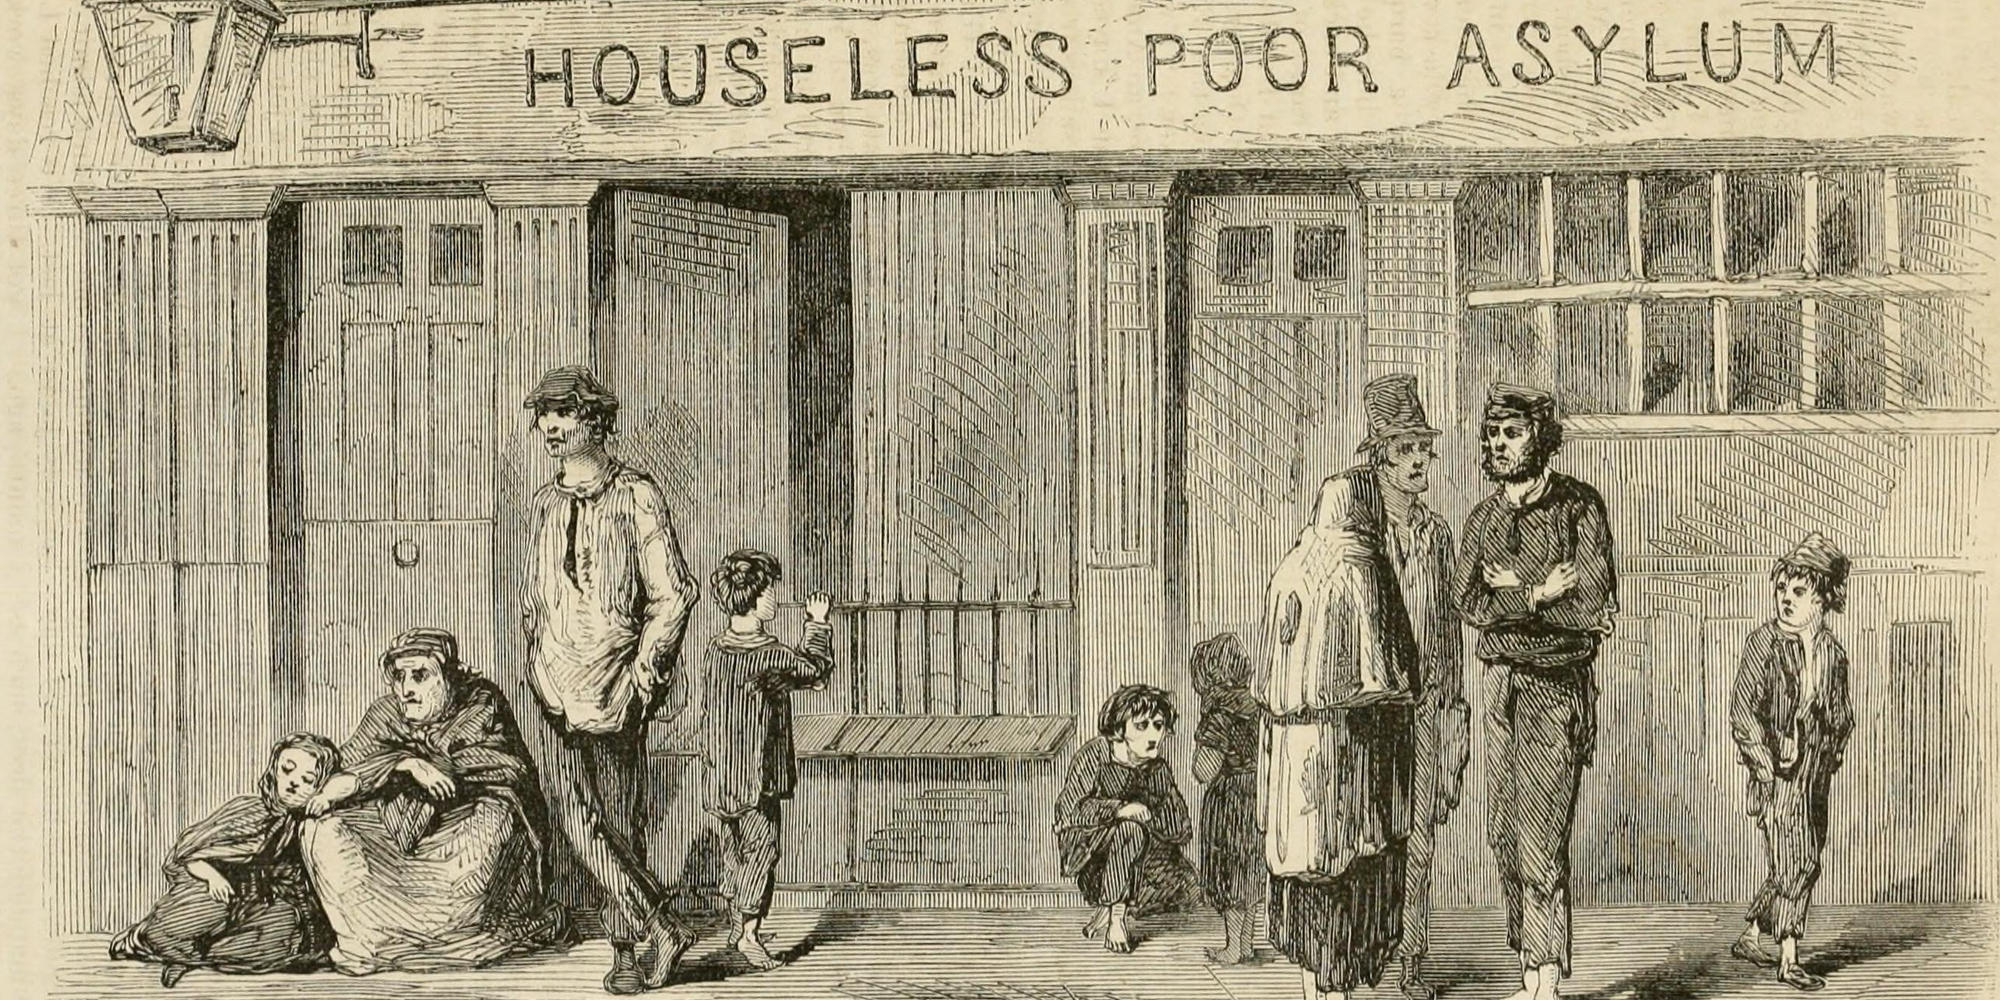 sketch of 'Houseless poor asylum'